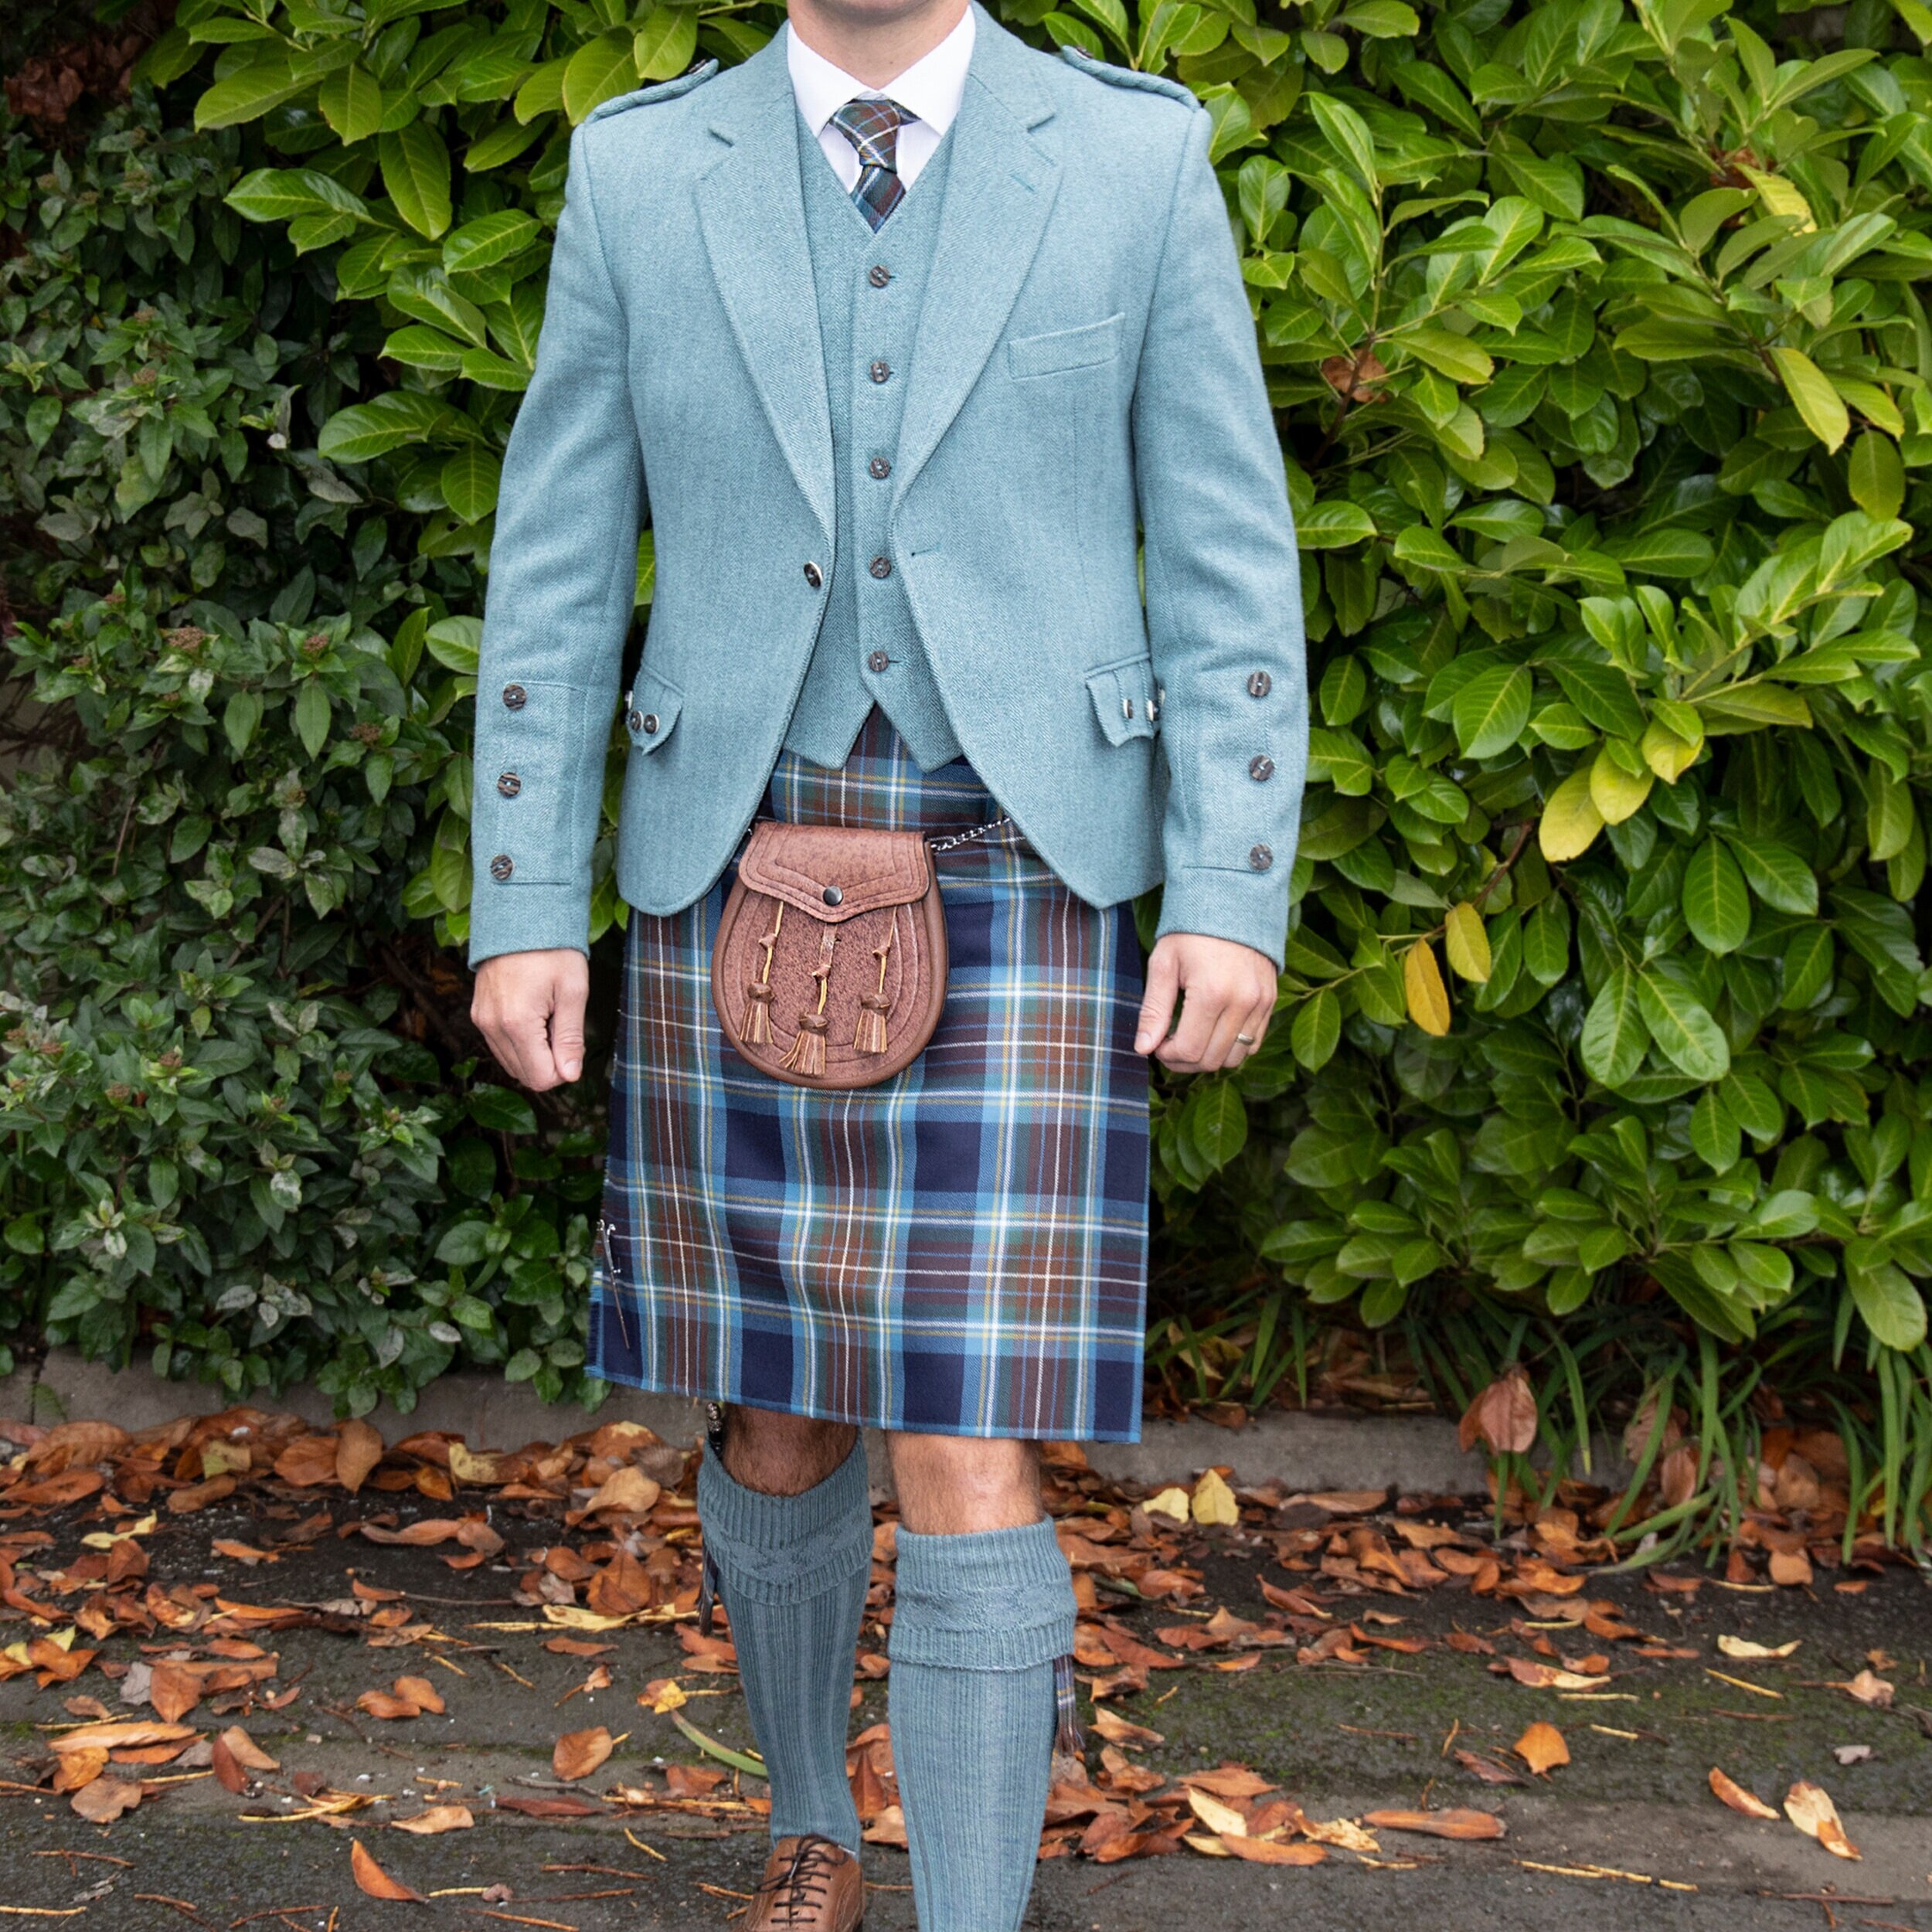 Cravatta TARTAN Holyrood 100% pura lana pettinata Kilt MADE IN SCOTLAND Menswear 